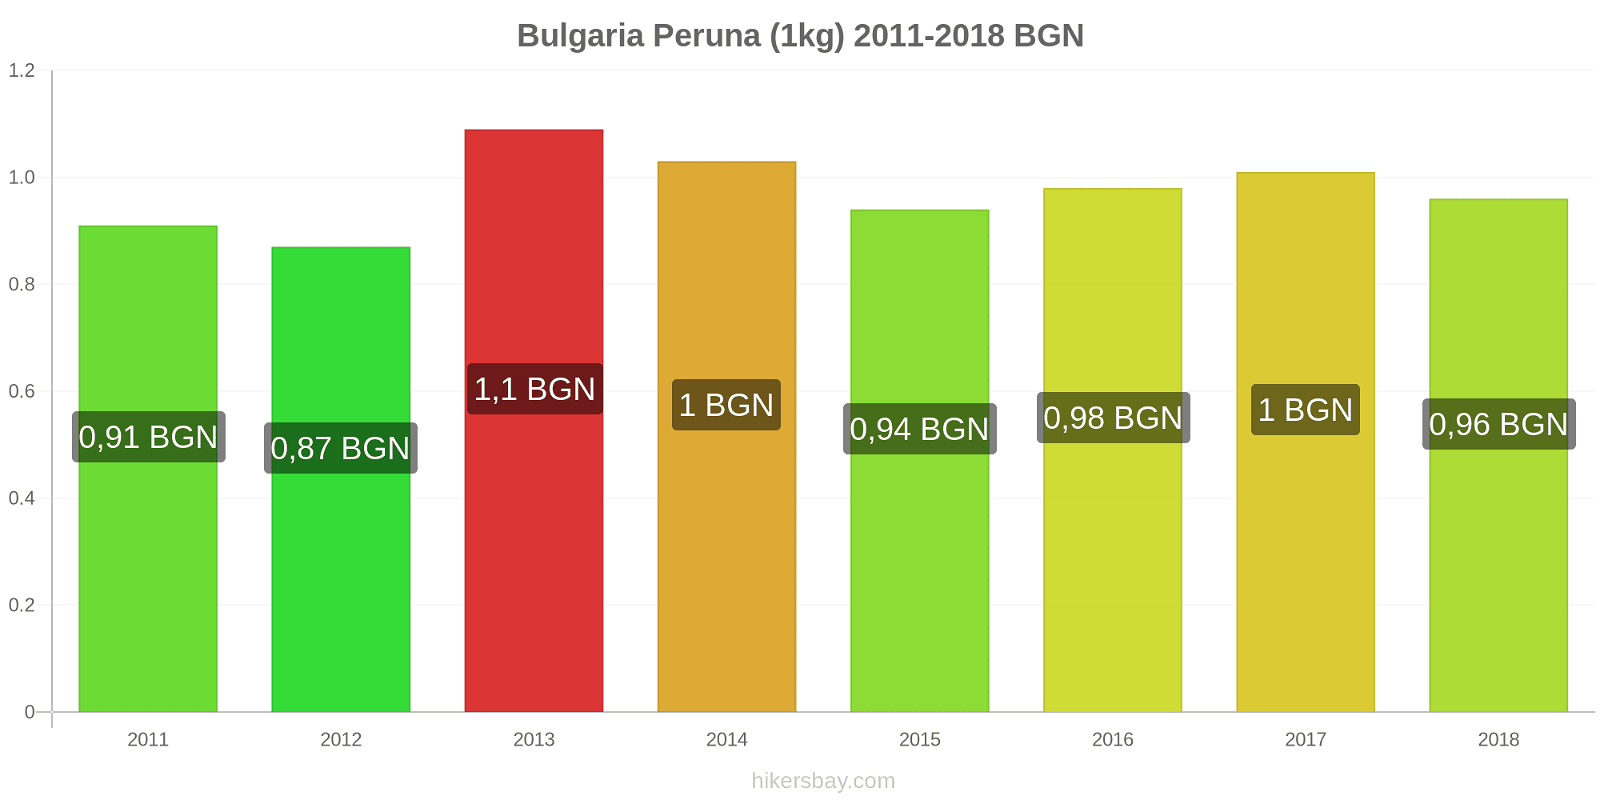 Bulgaria hintojen muutokset Peruna (1kg) hikersbay.com